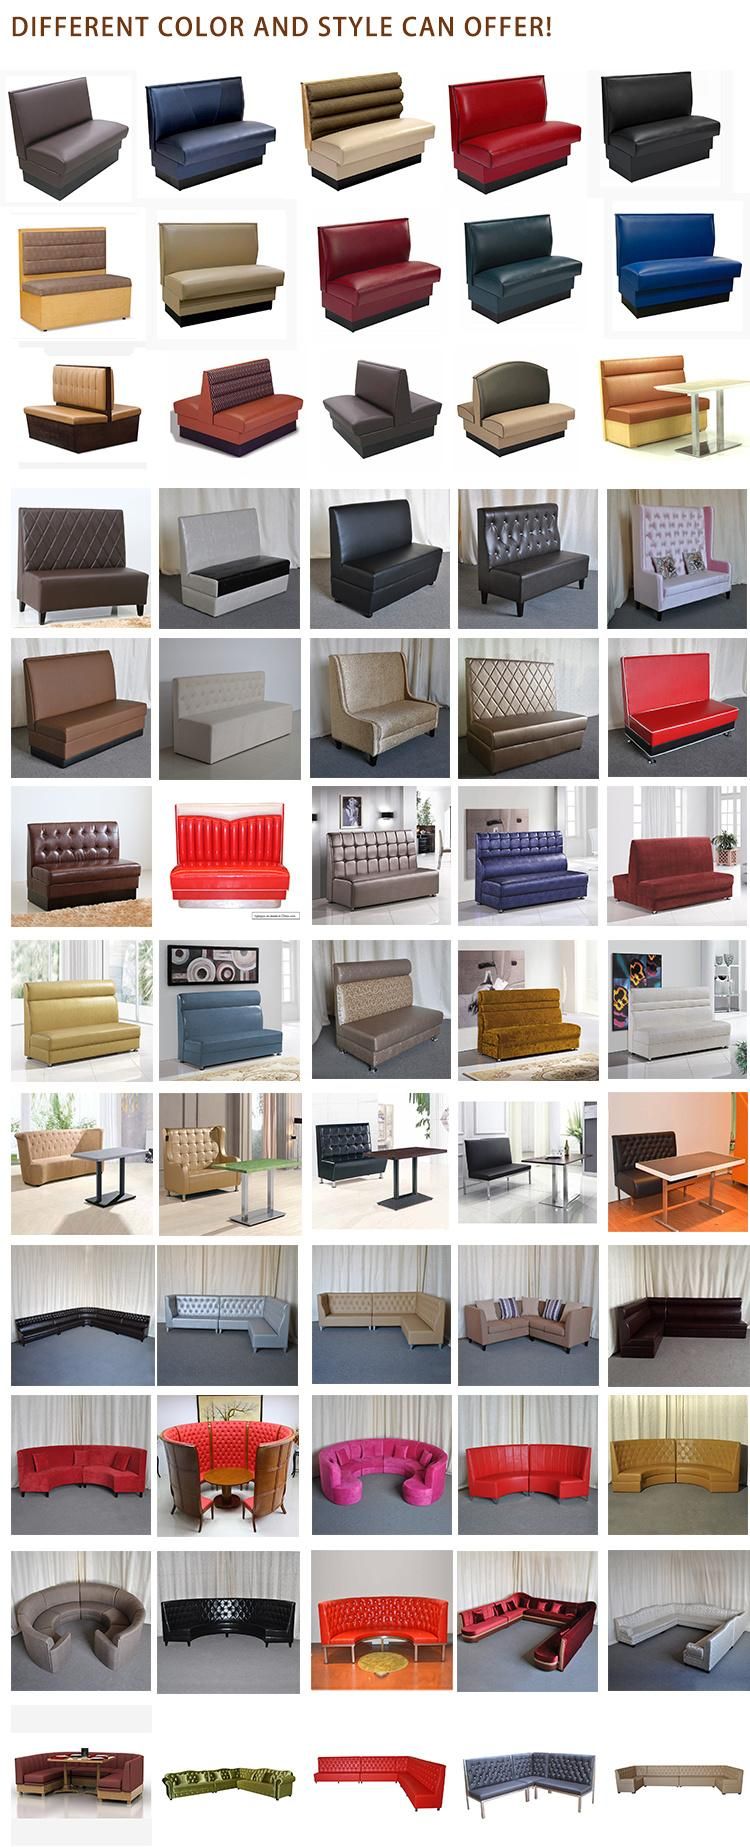 New Design Grace Home Sofa Seating Leather Sofa (SP-KS316)